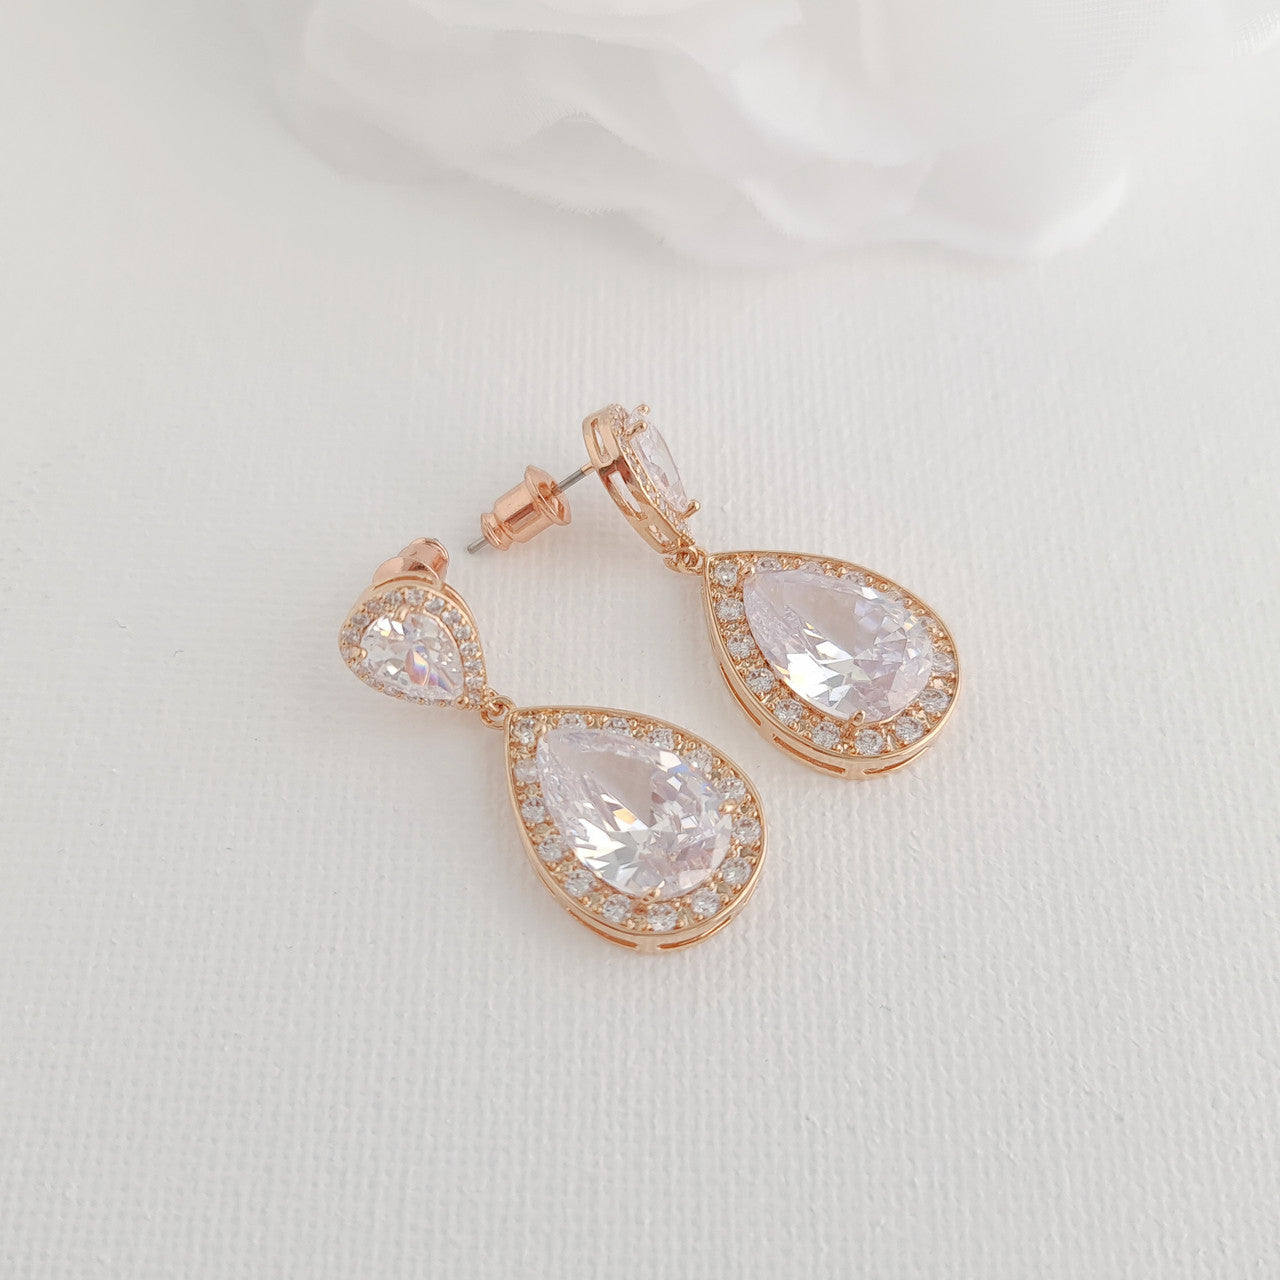 Wedding Earrings in Crystal Teardrops for Brides- Evelyn